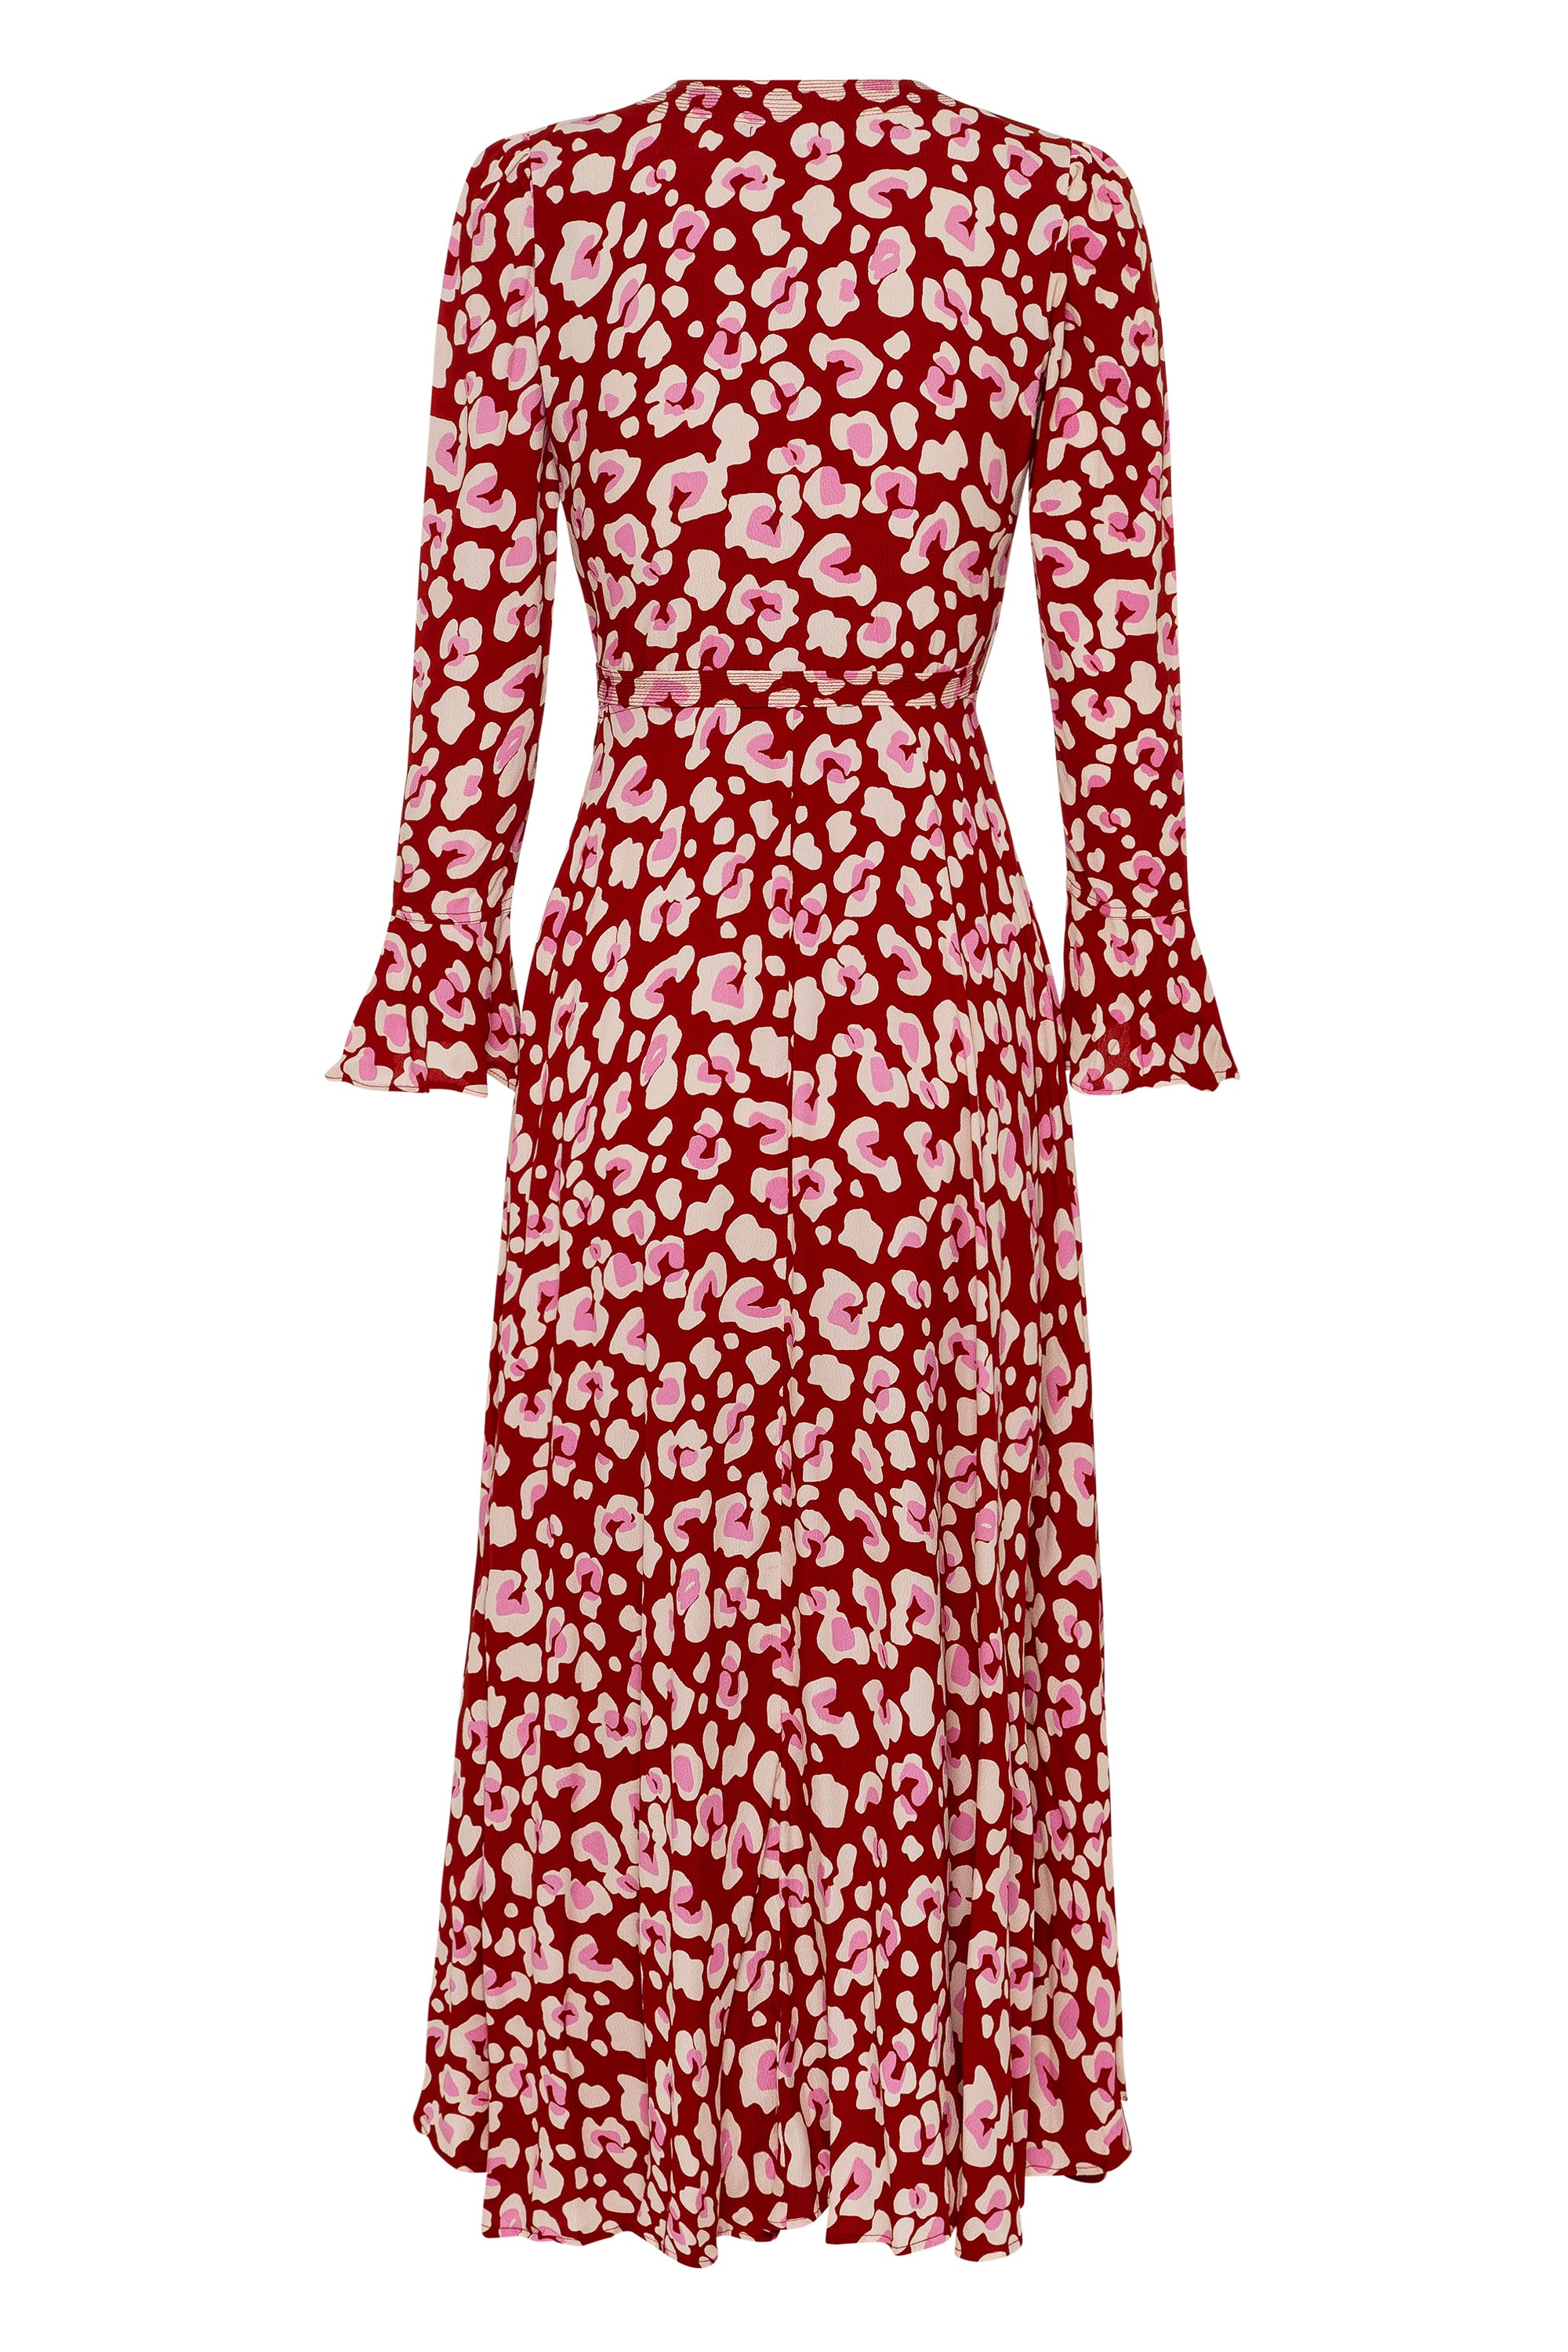 ghost pink leopard print dress